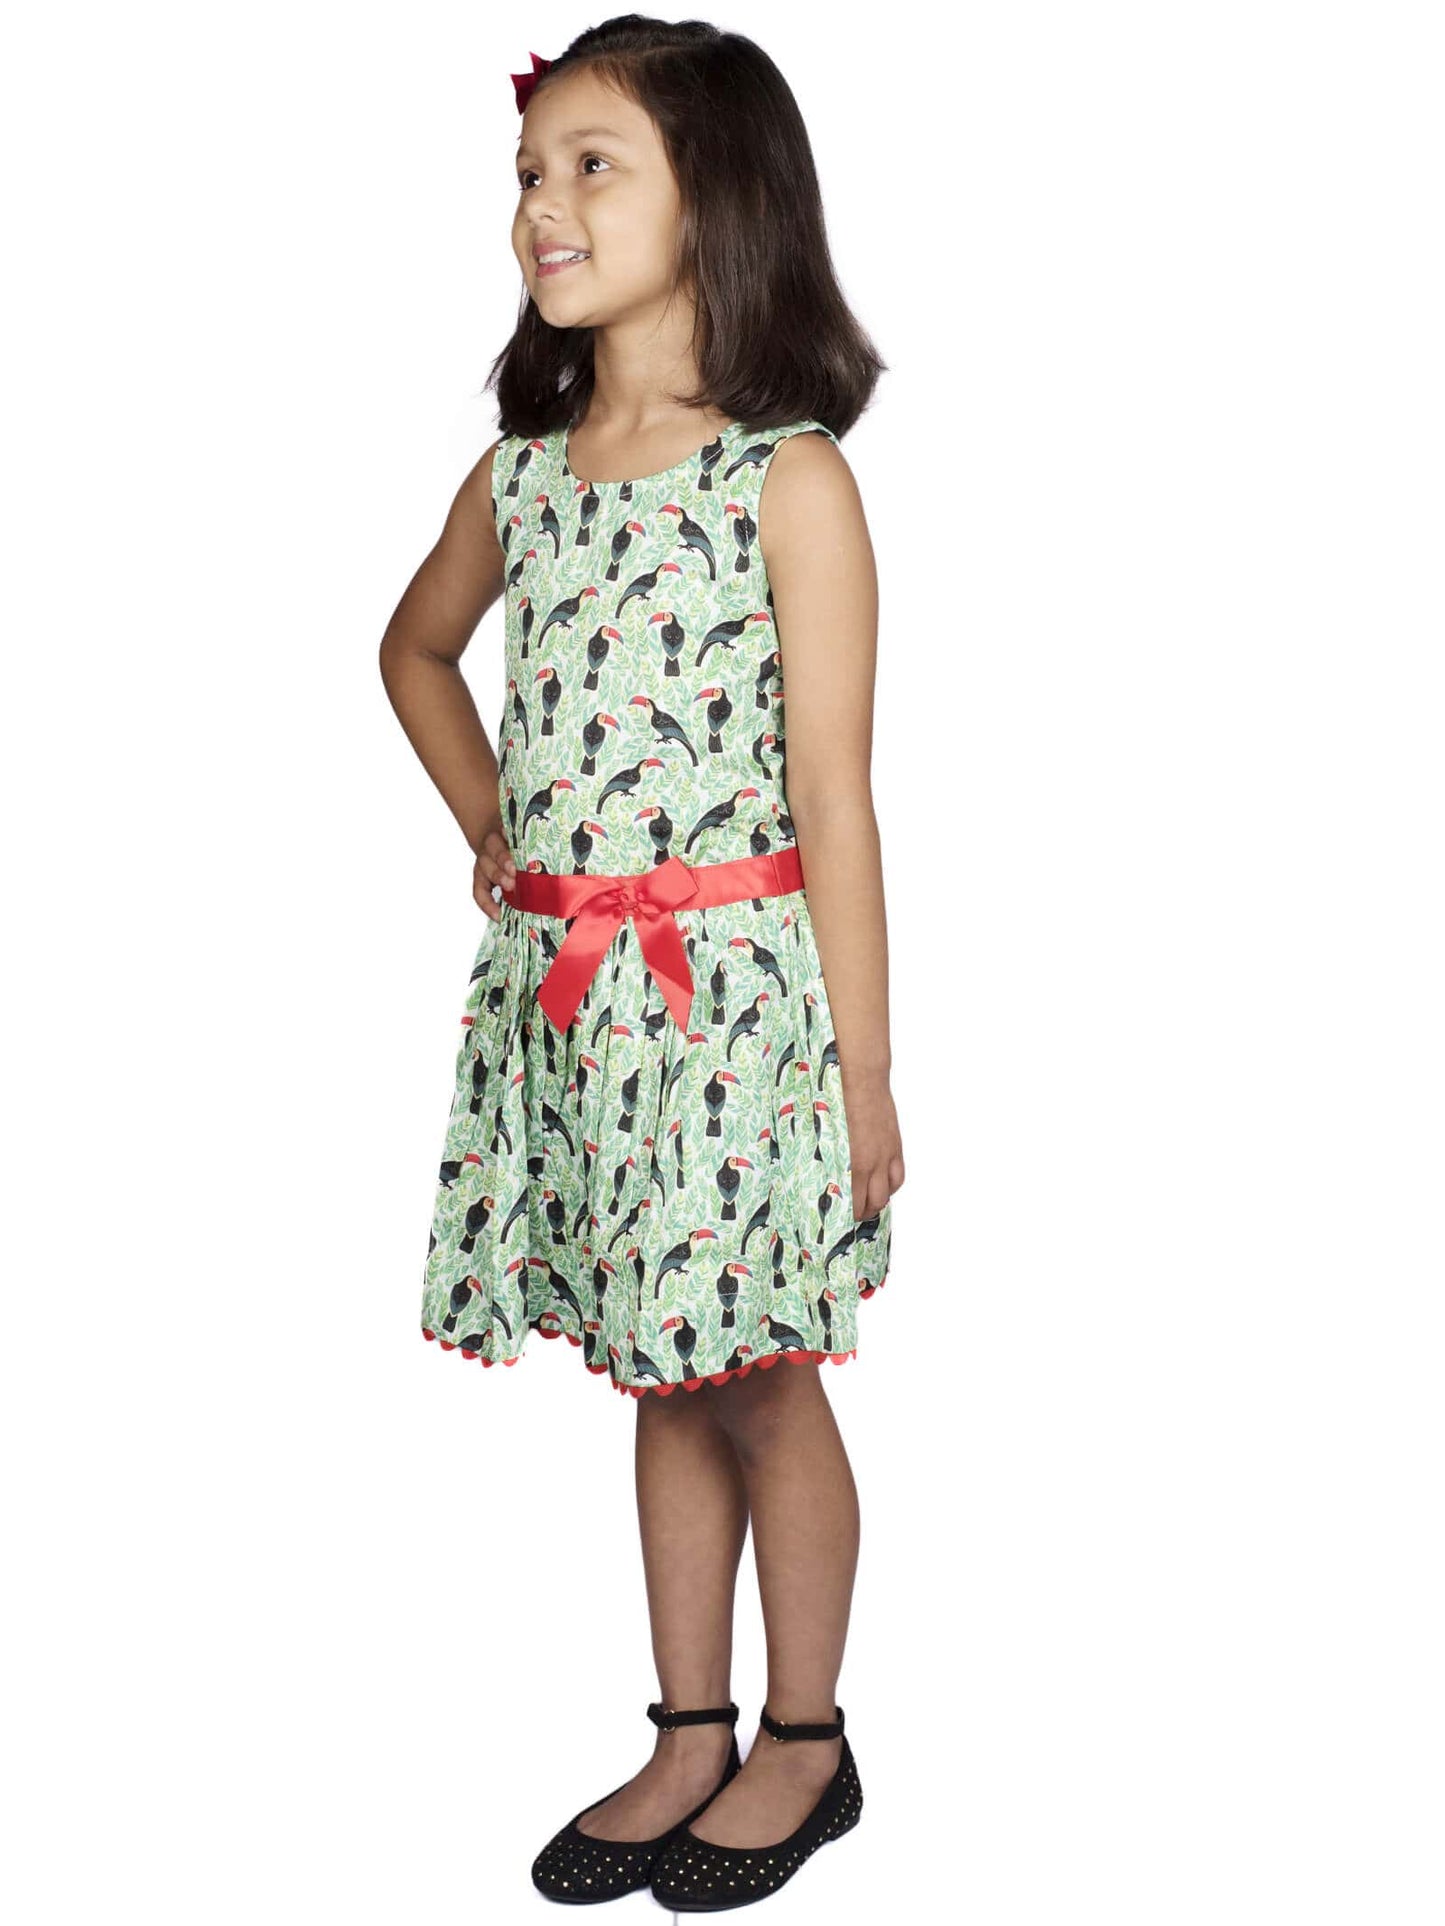 Toucan Print Dress